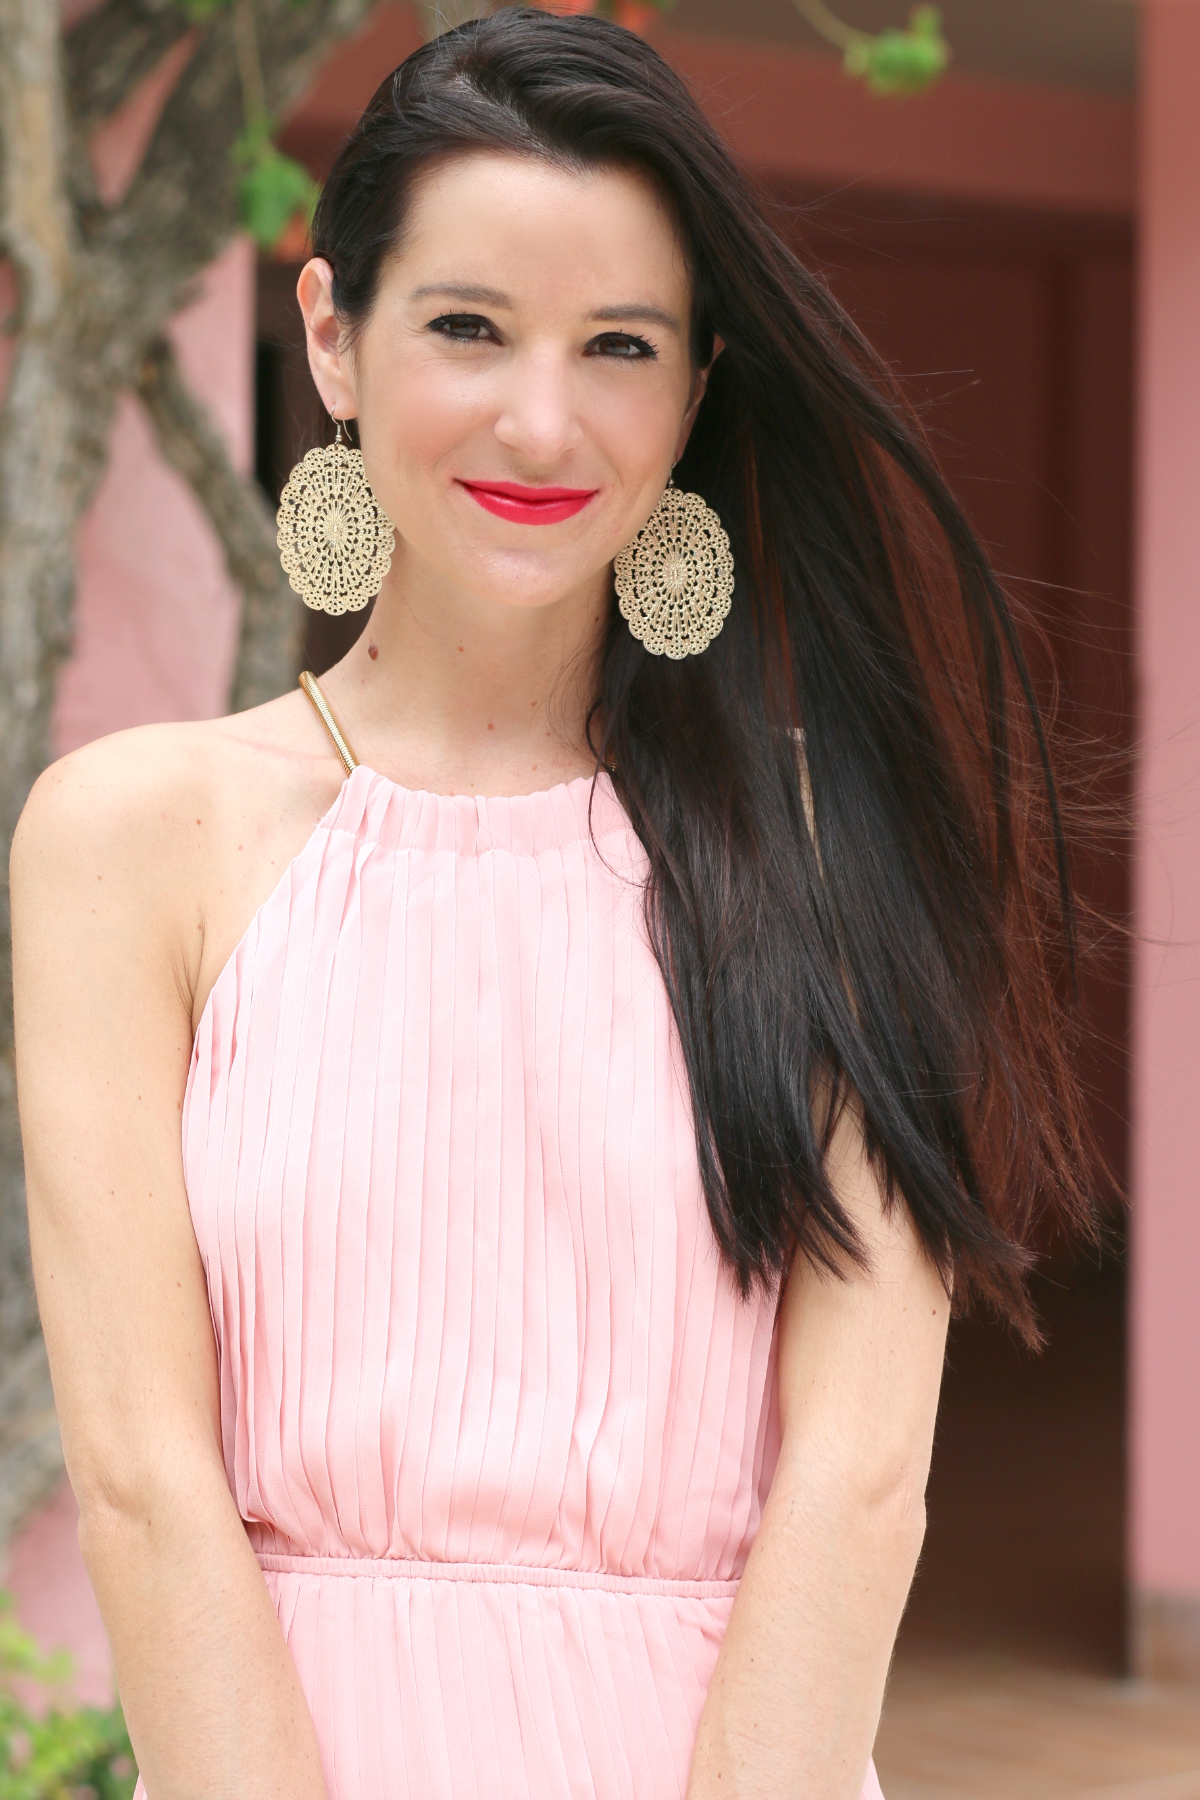 SheInside Pink Pleated Maxi Dress at the Boca Raton Resort in Boca Raton, Florida